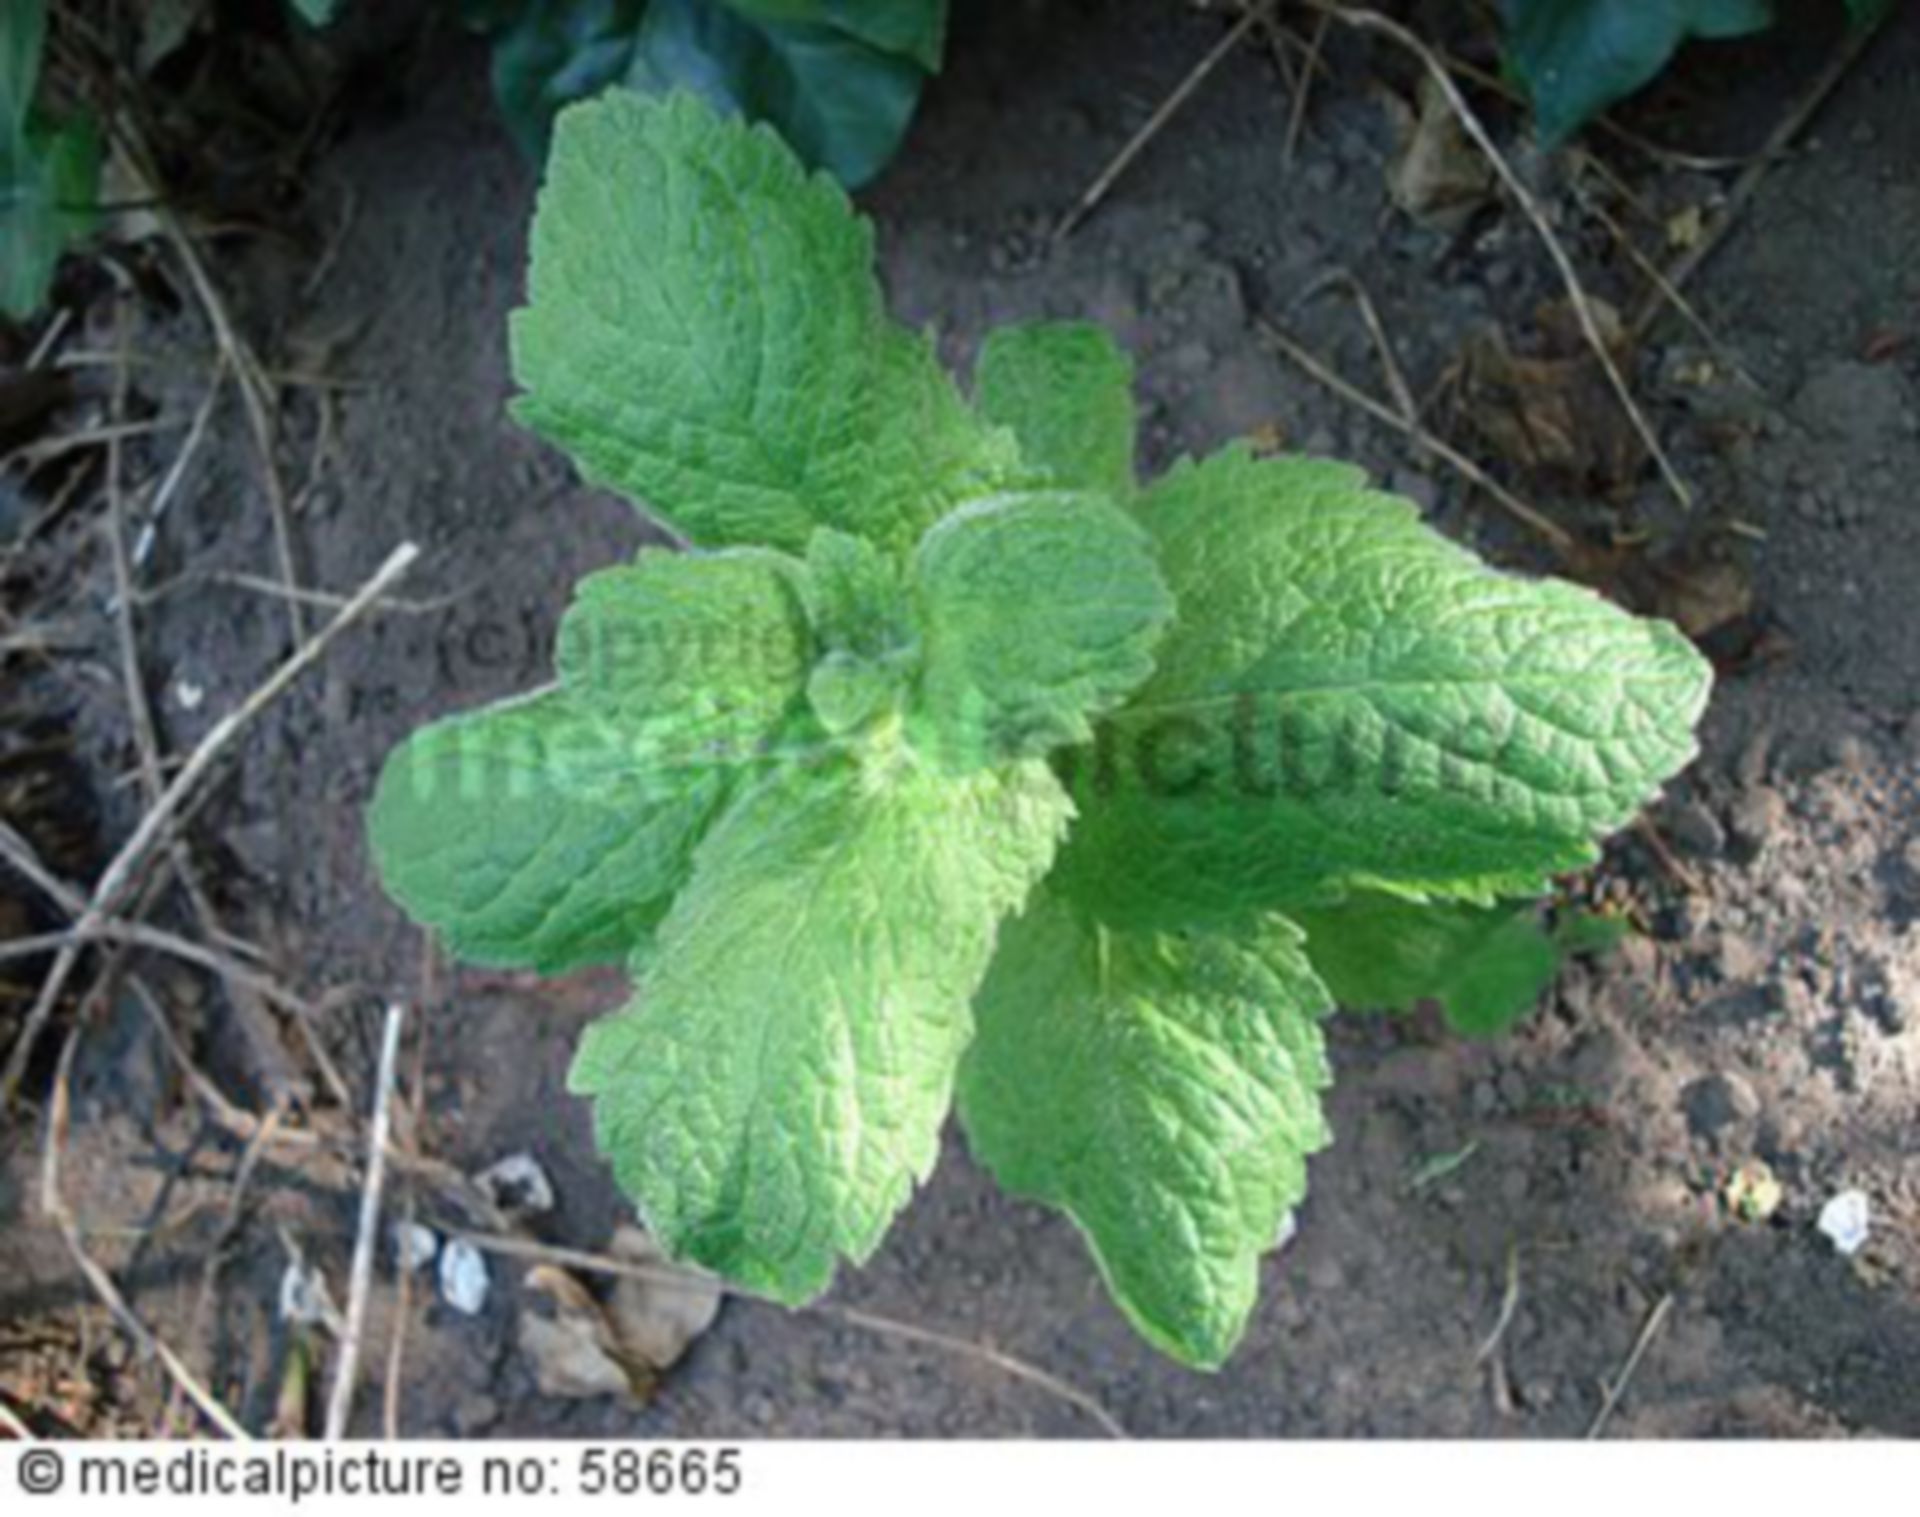 Peppermint plant